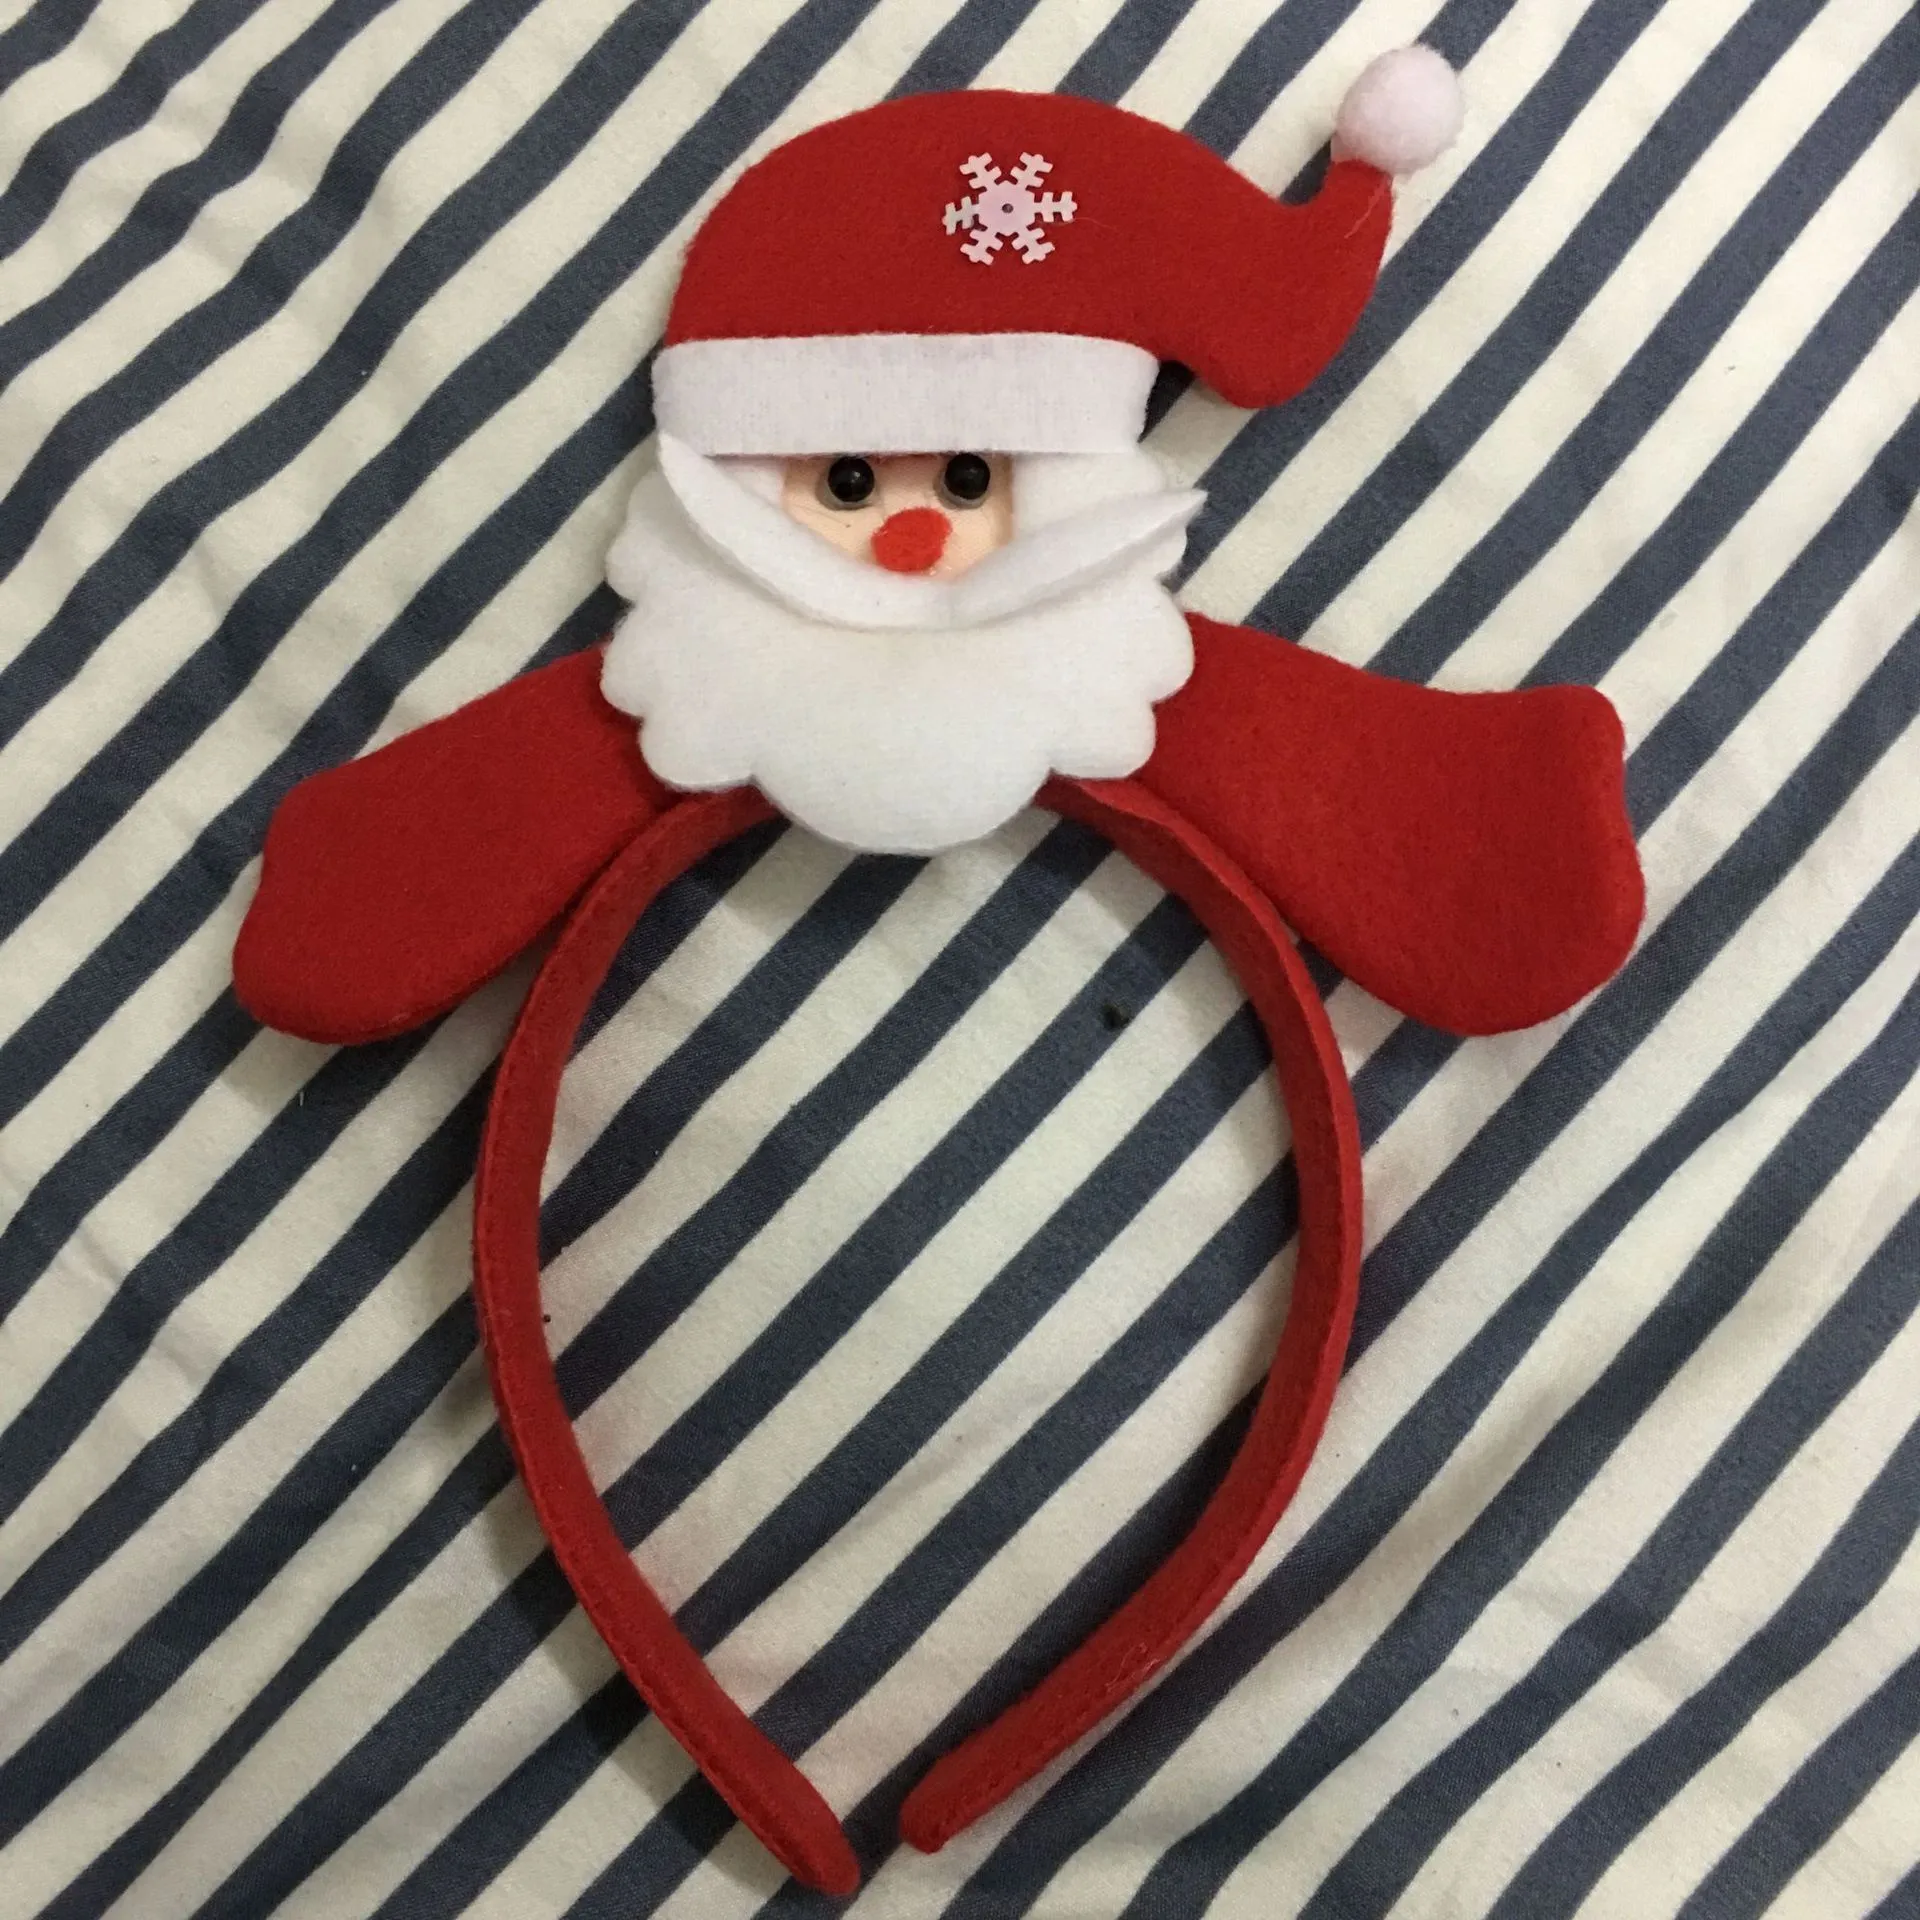 Cartoon Christmas headdress Santa Claus headband antlers elk glitter headband lights adult children Led Rave Toy